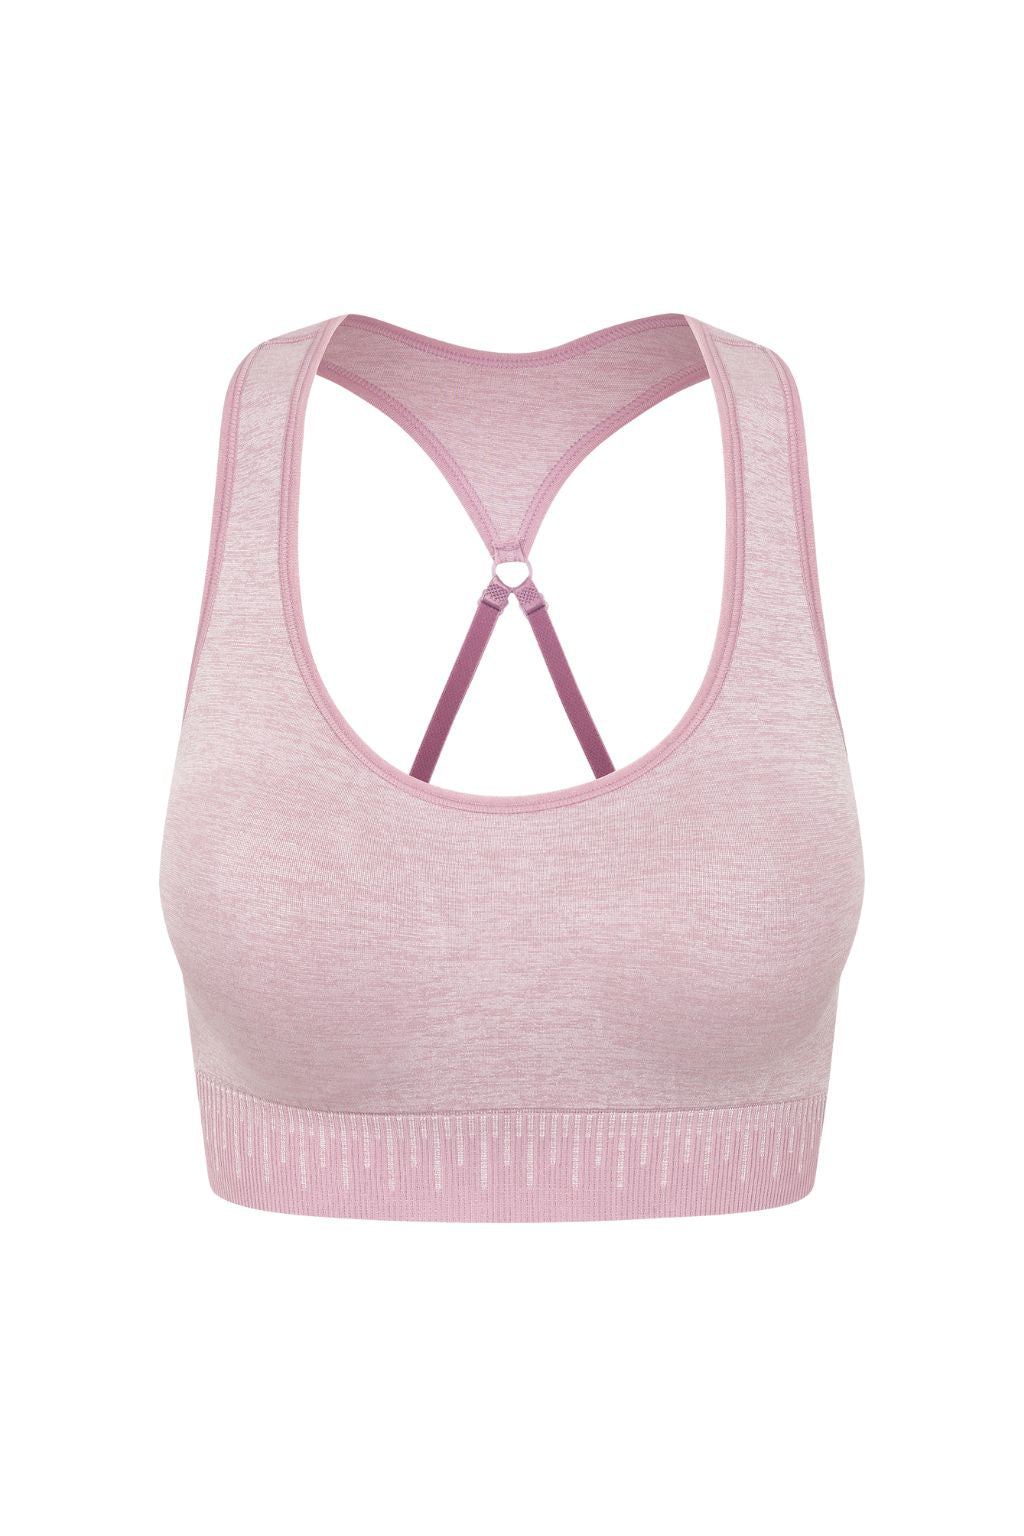 Victoria's Secret sports bra  Sports bra victoria secret, Sport bra  brands, Clothes design